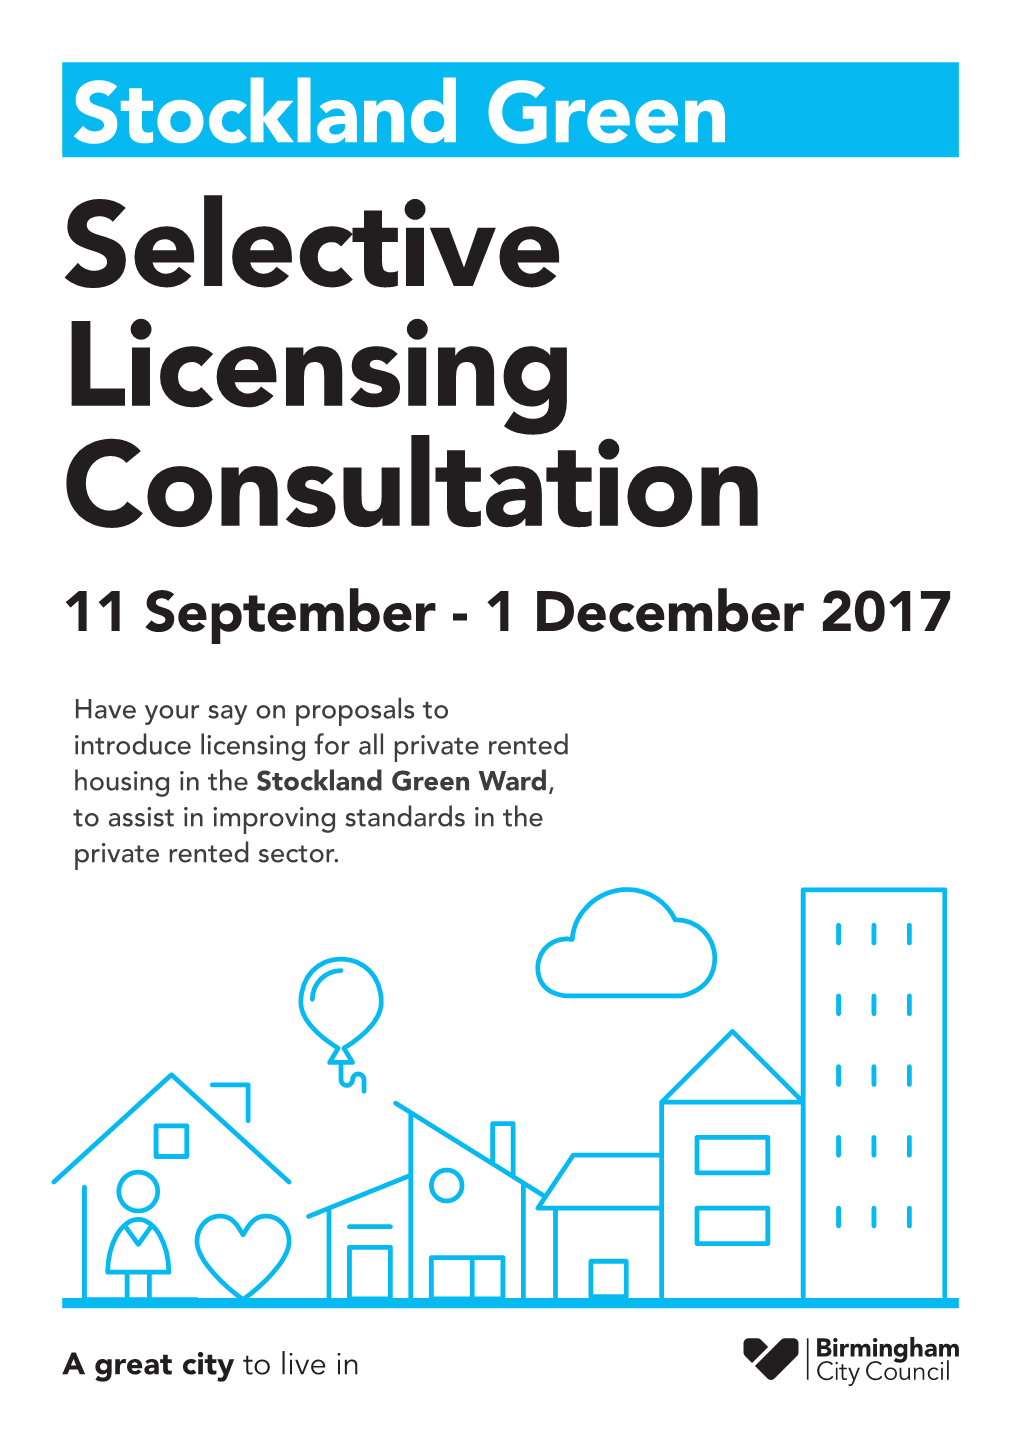 Stockland Green Selective Licensing Consultation 11 September - 1 December 2017